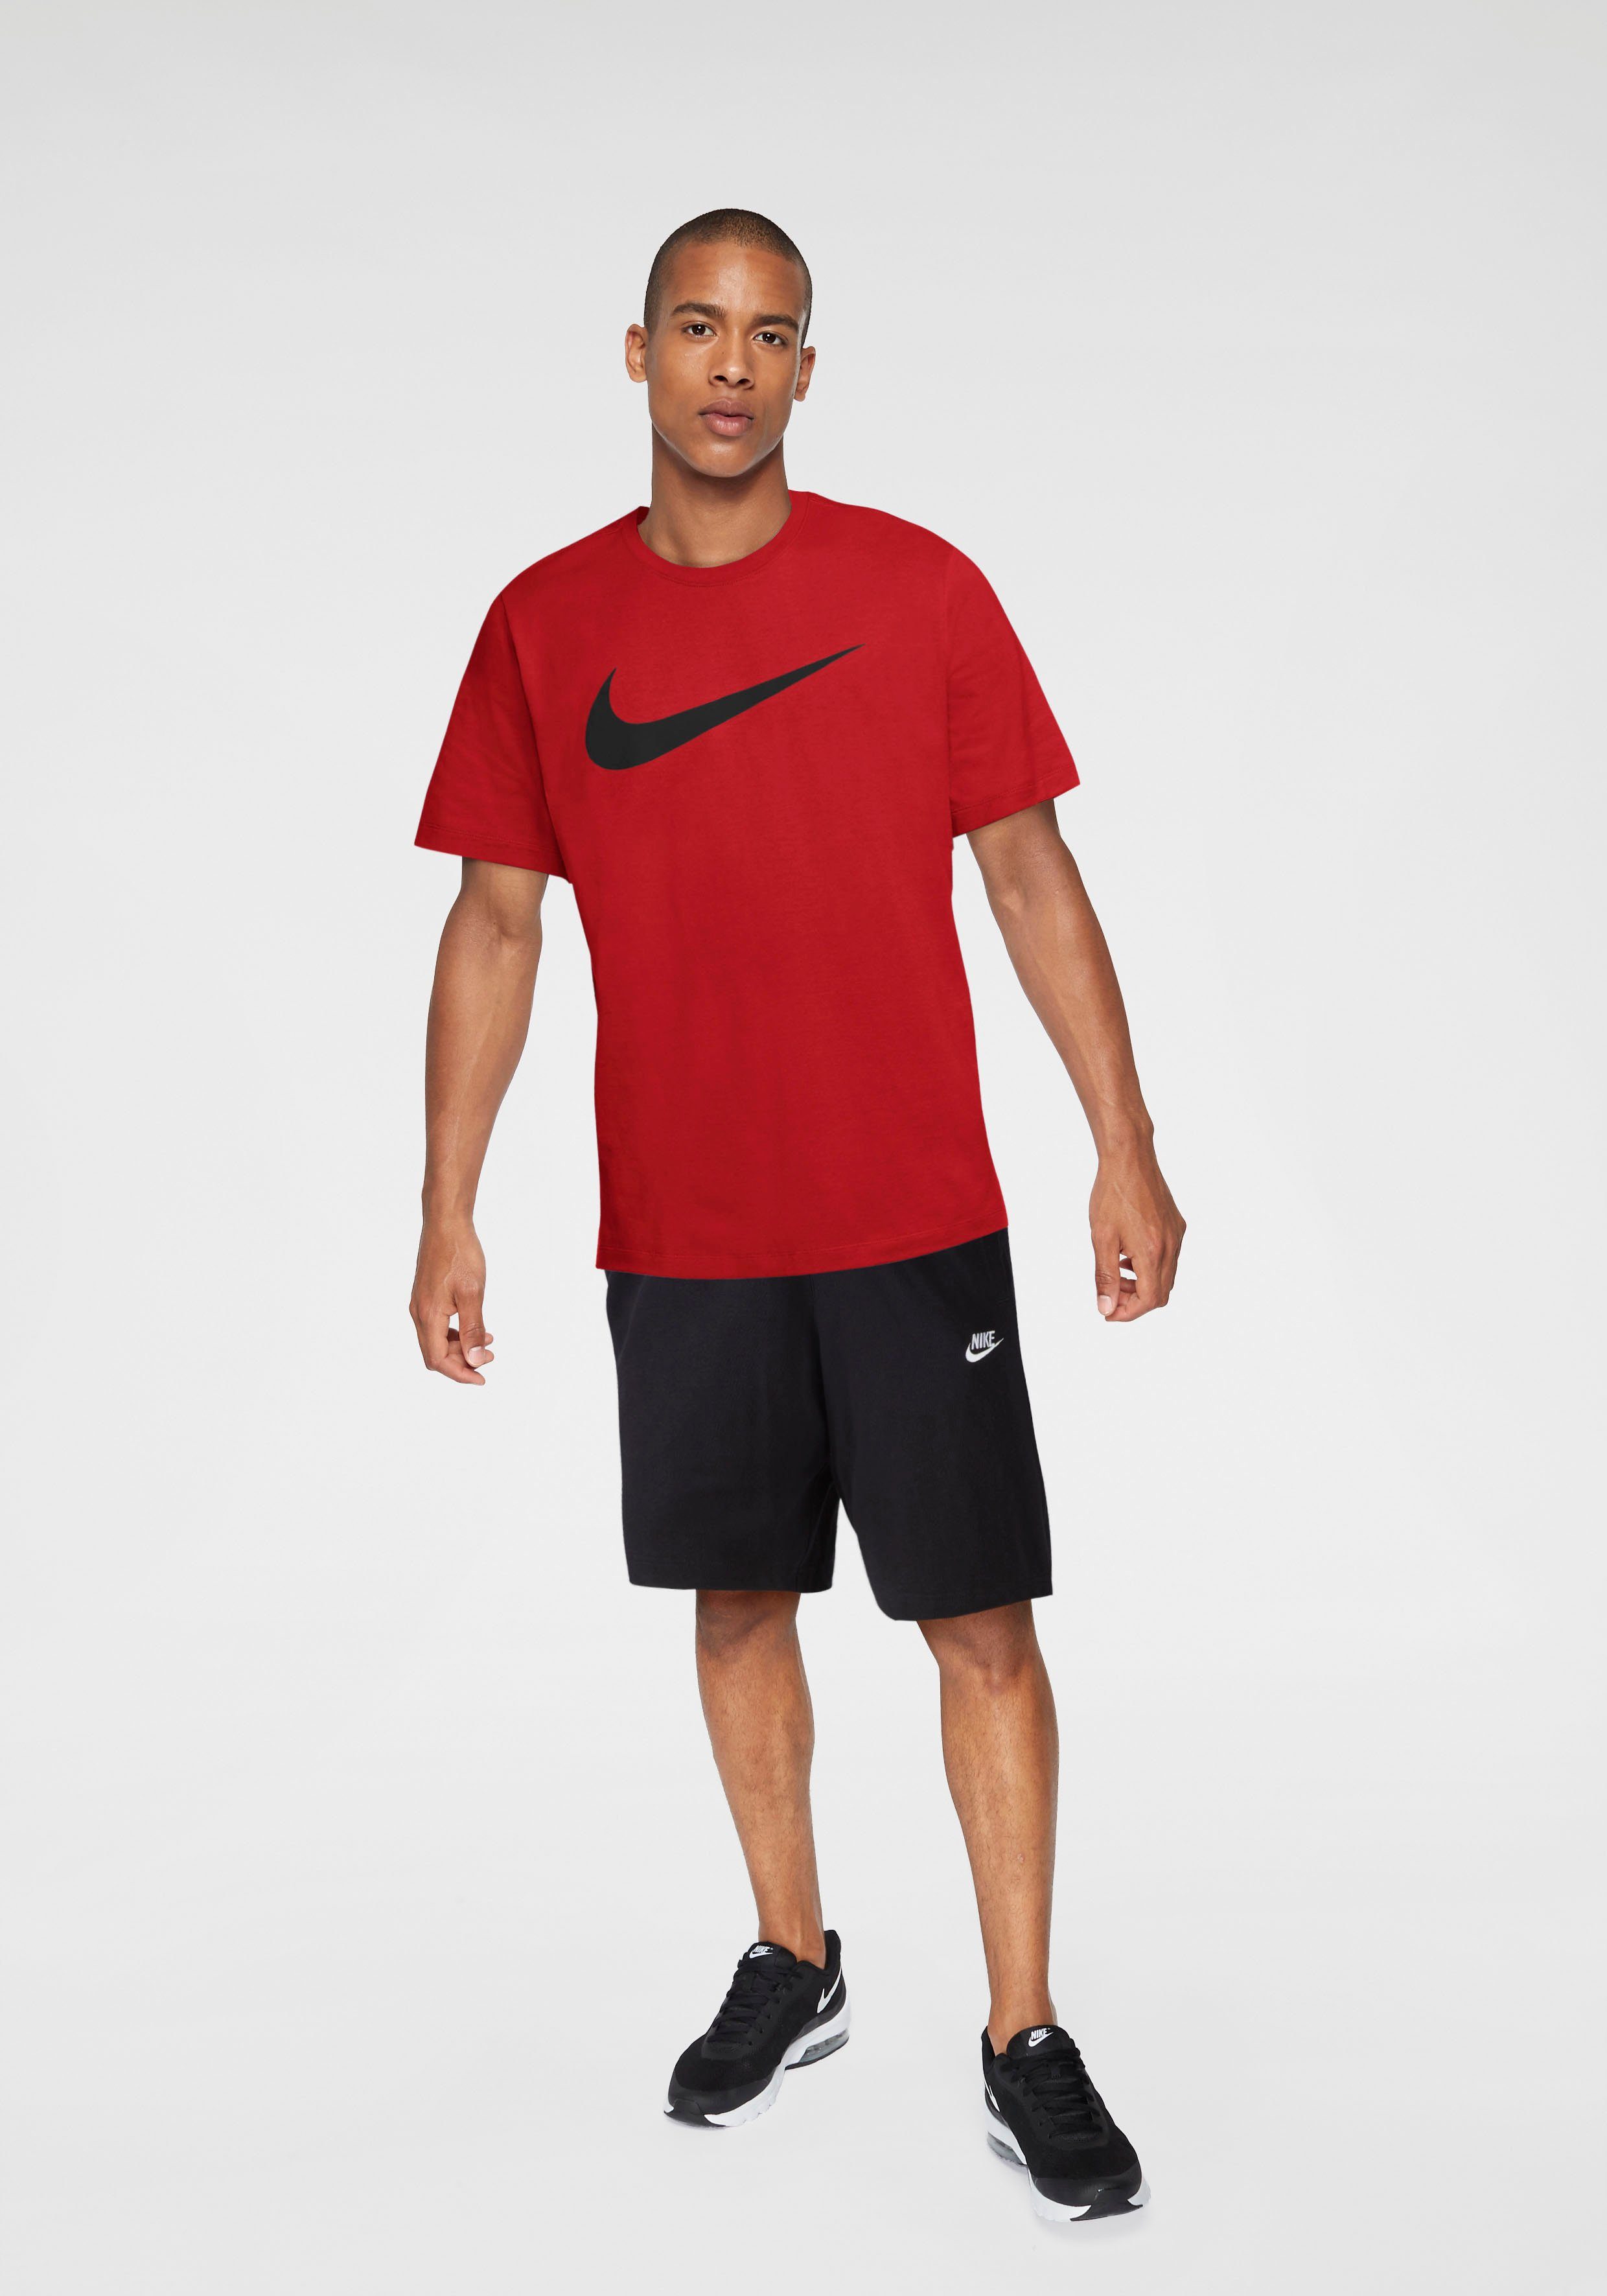 Nike Sportswear Shorts schwarz Club Shorts Men's